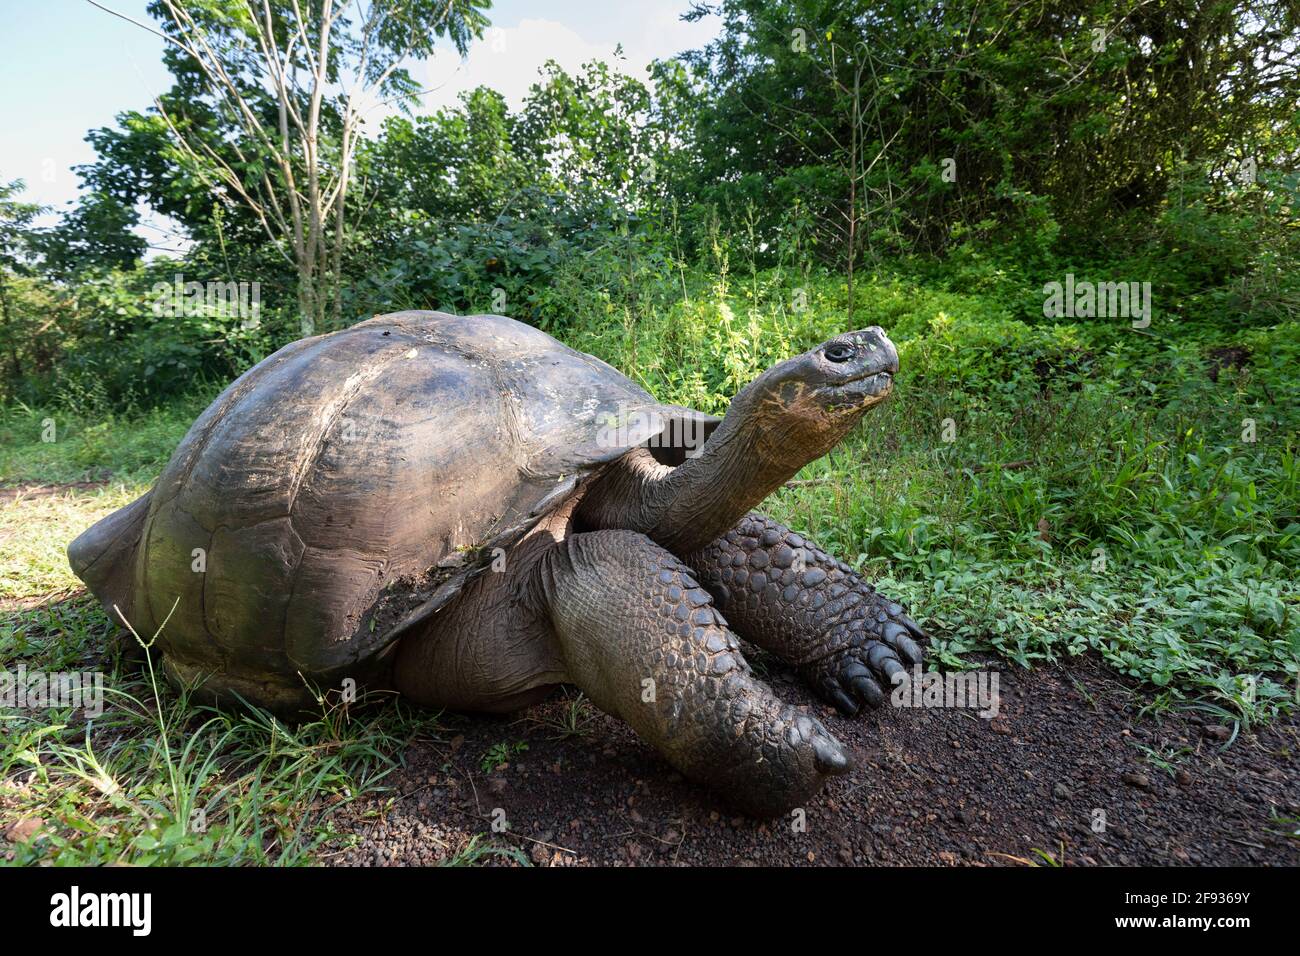 La tartaruga più grande del mondo. Galapagos tartaruga gigante, Chelonoidis niger. Isole Galapagos. Isola di Santa Cruz. (Foto CTK/Ondrej Zaruba) Foto Stock